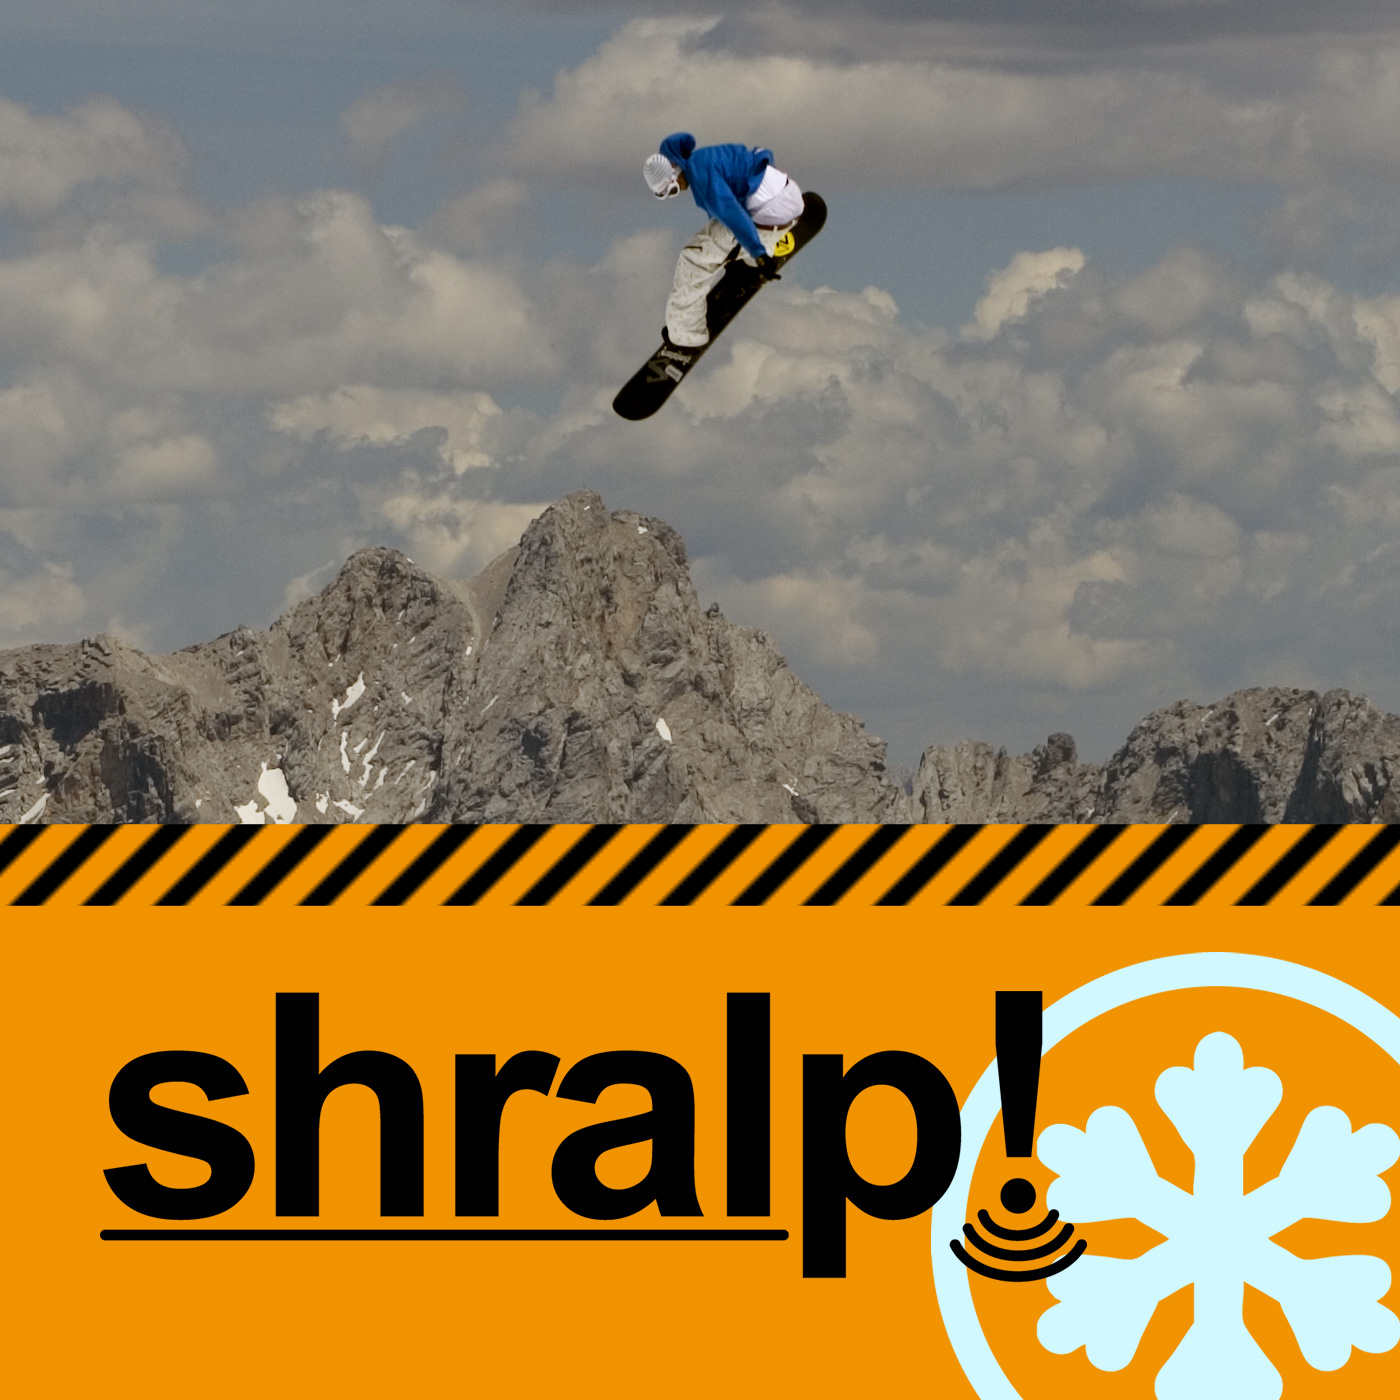 shralp! snowboarding video news